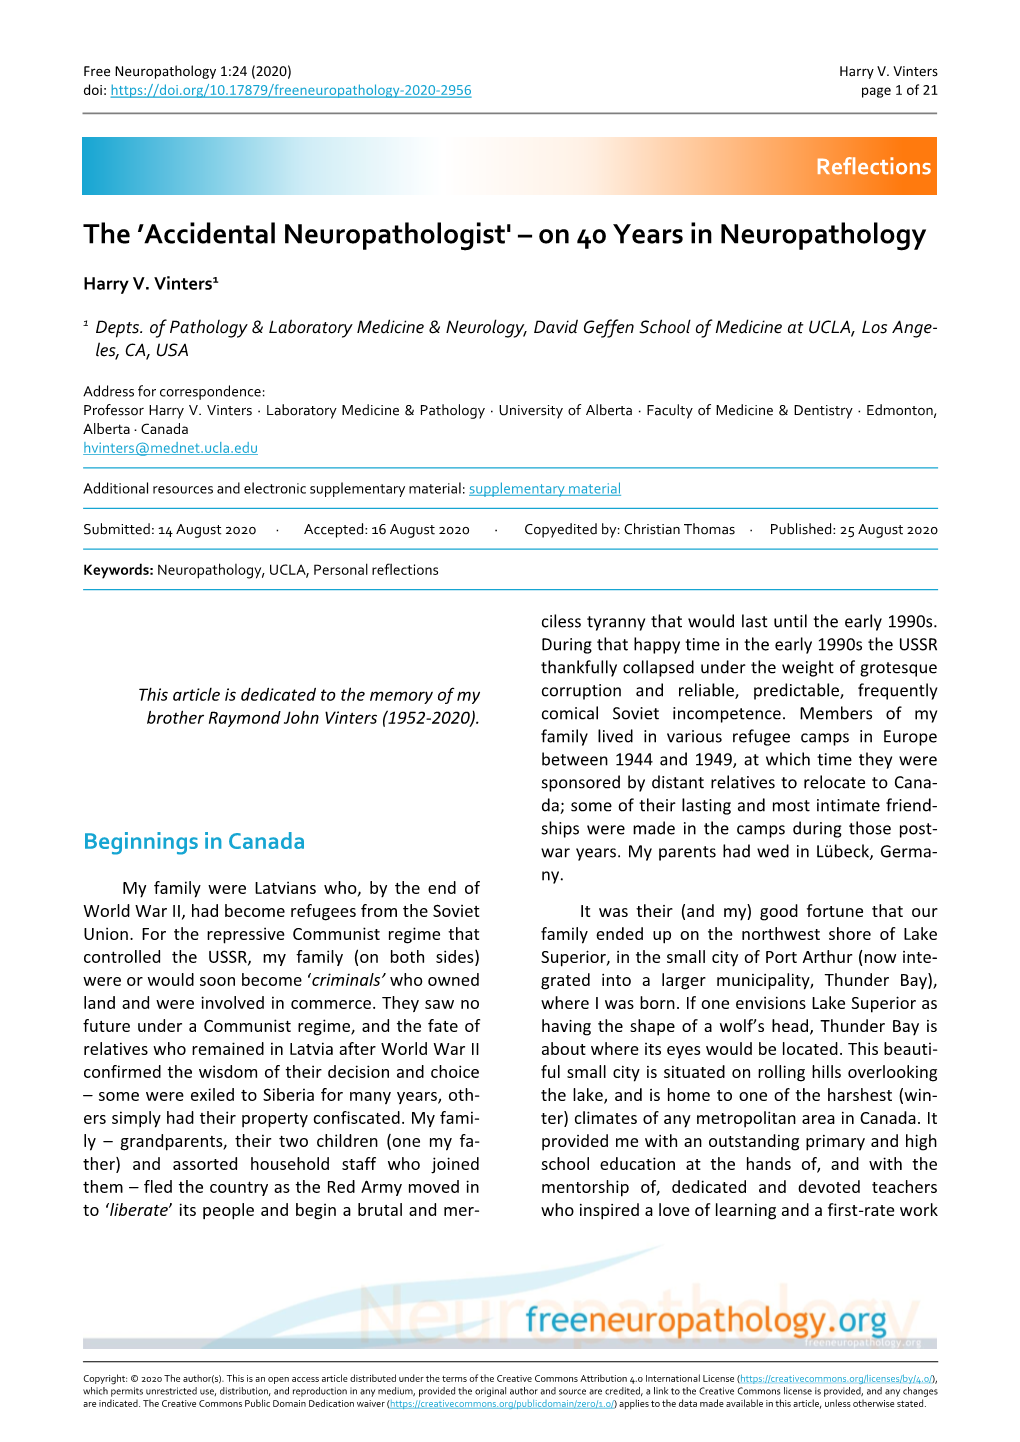 The 'Accidental Neuropathologist' – on 40 Years in Neuropathology